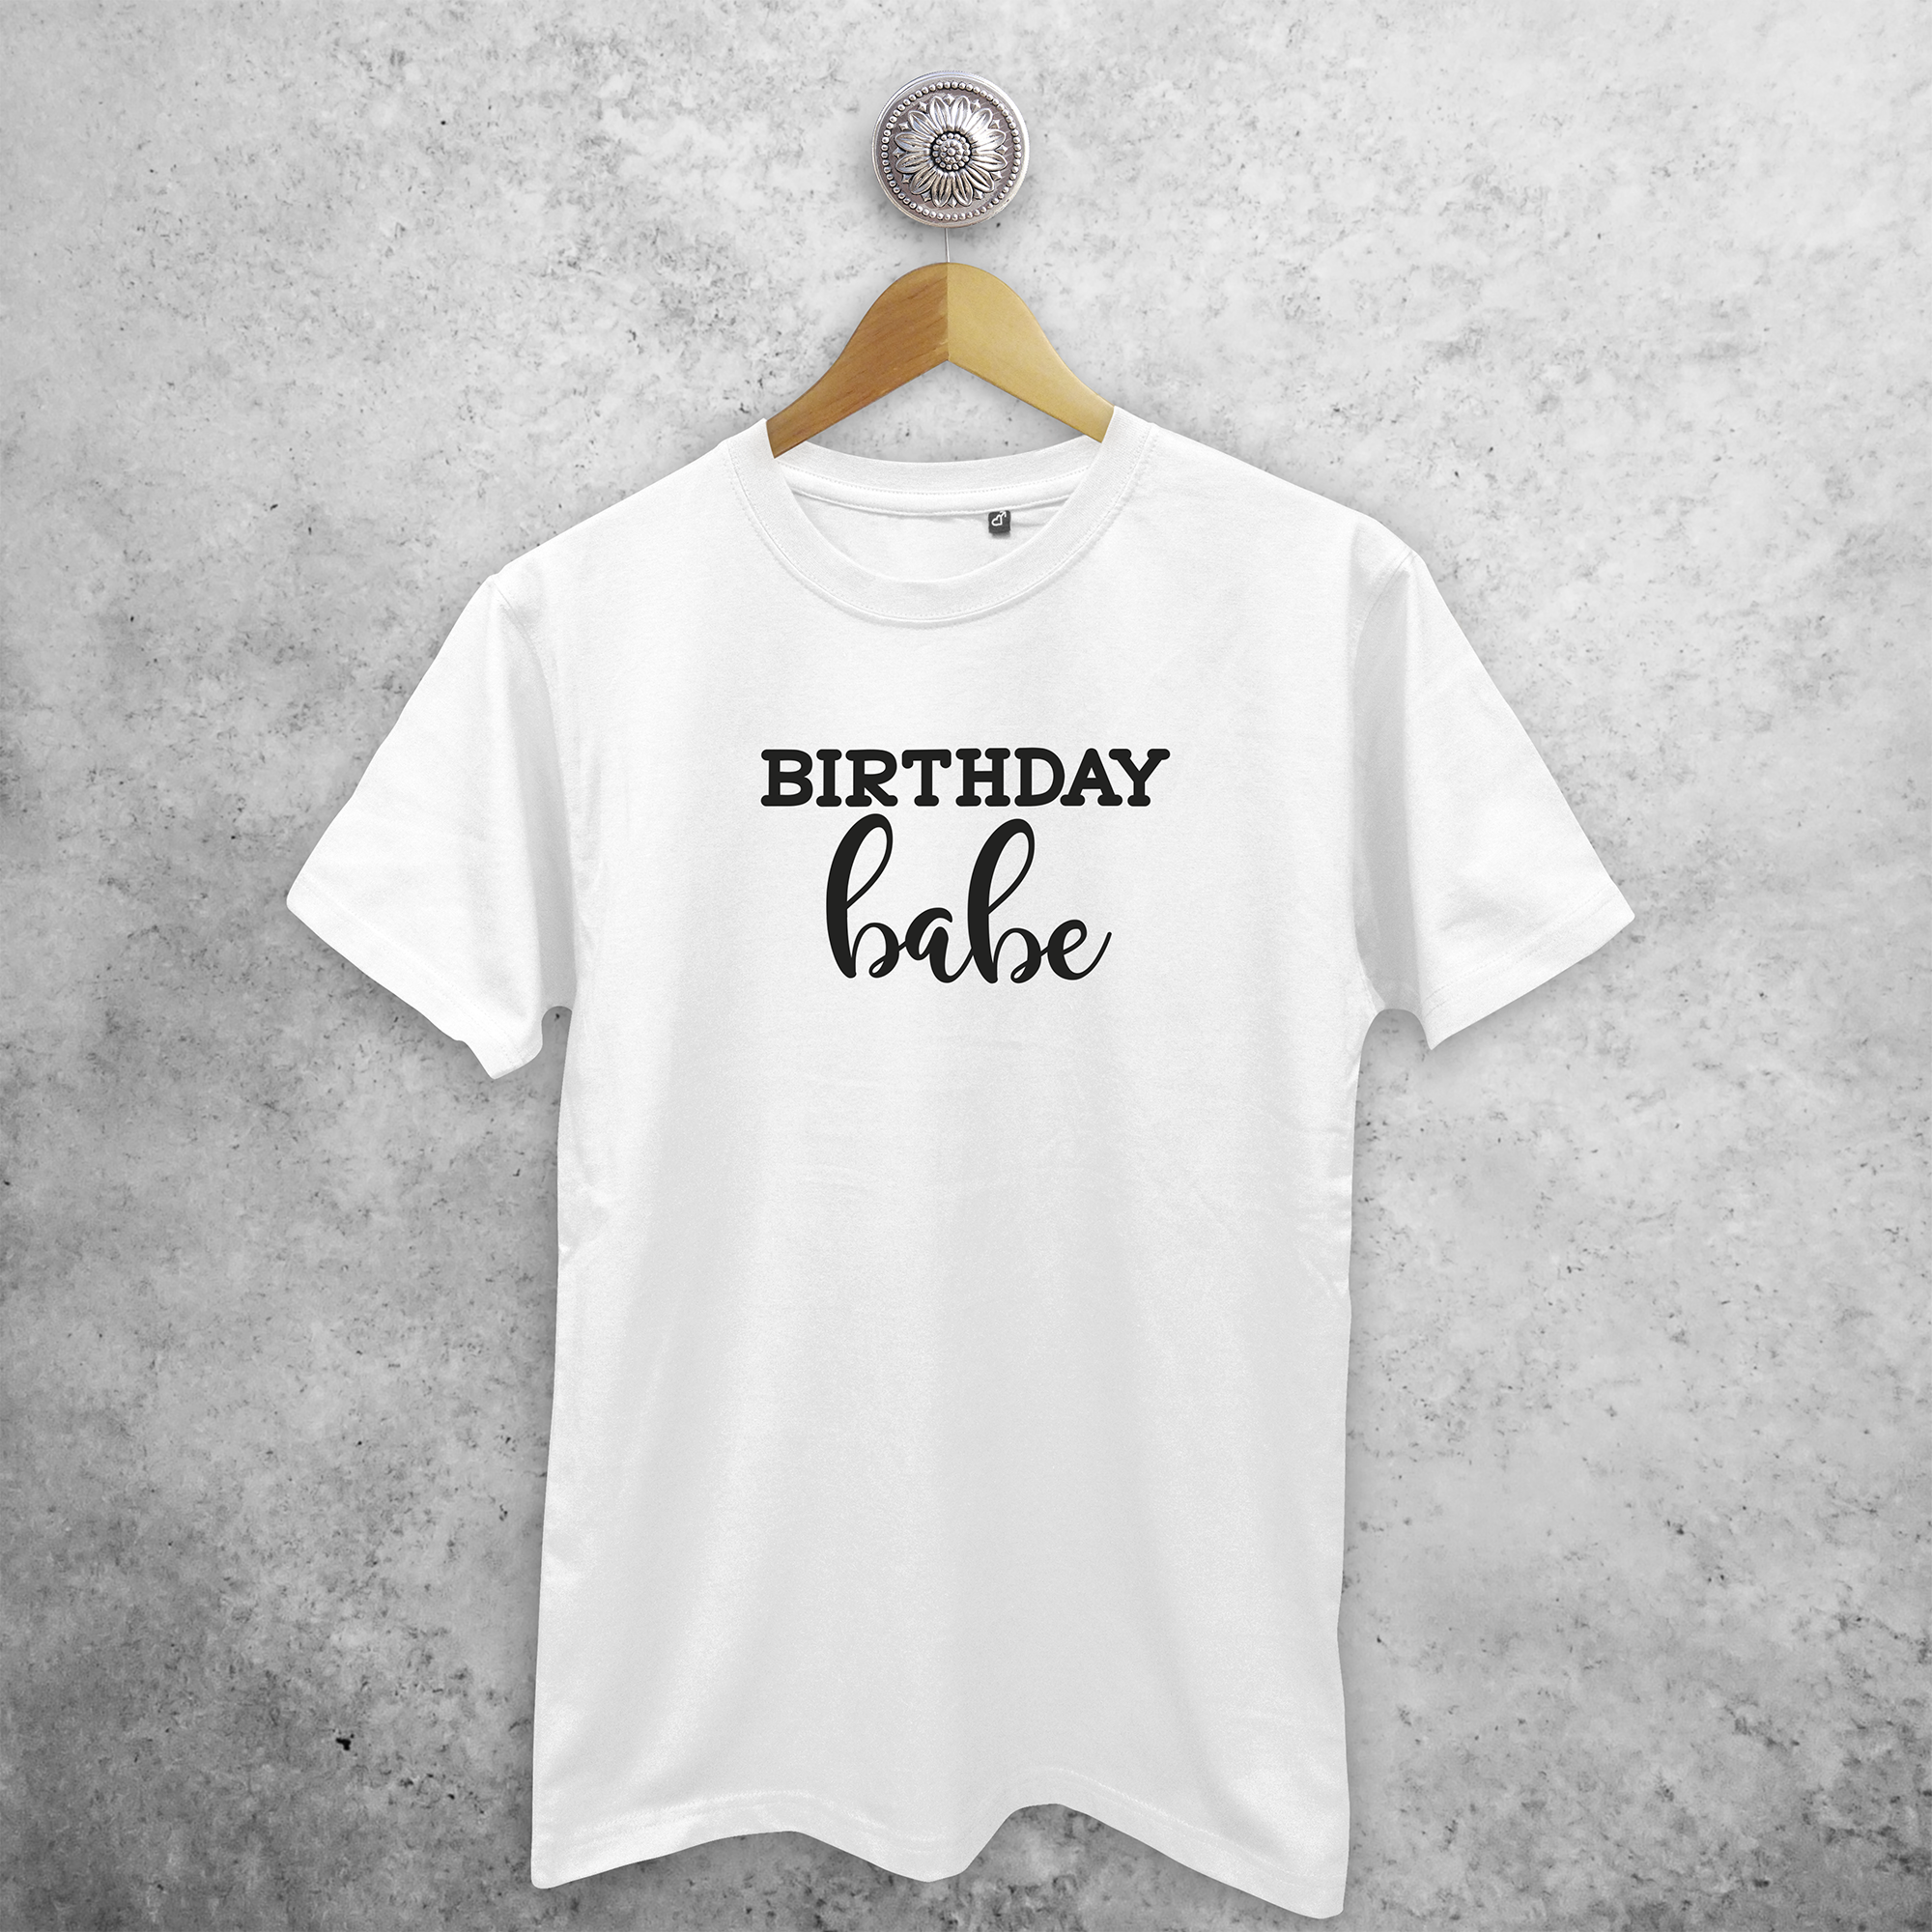 'Birthday babe' volwassene shirt